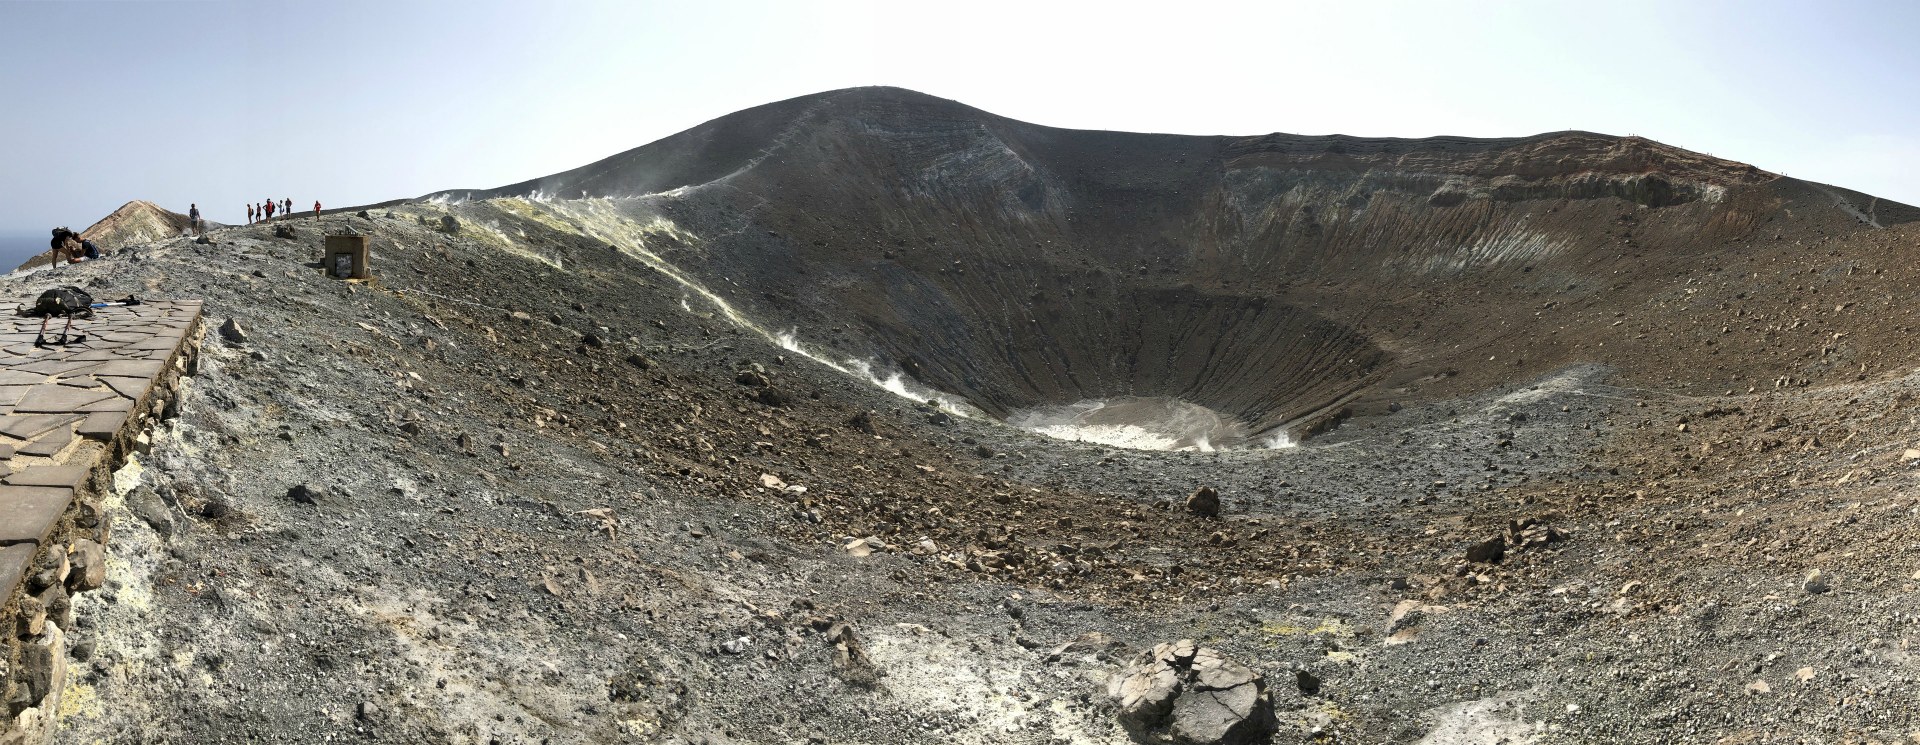 Crater, Vulcano, Aeolian Islands